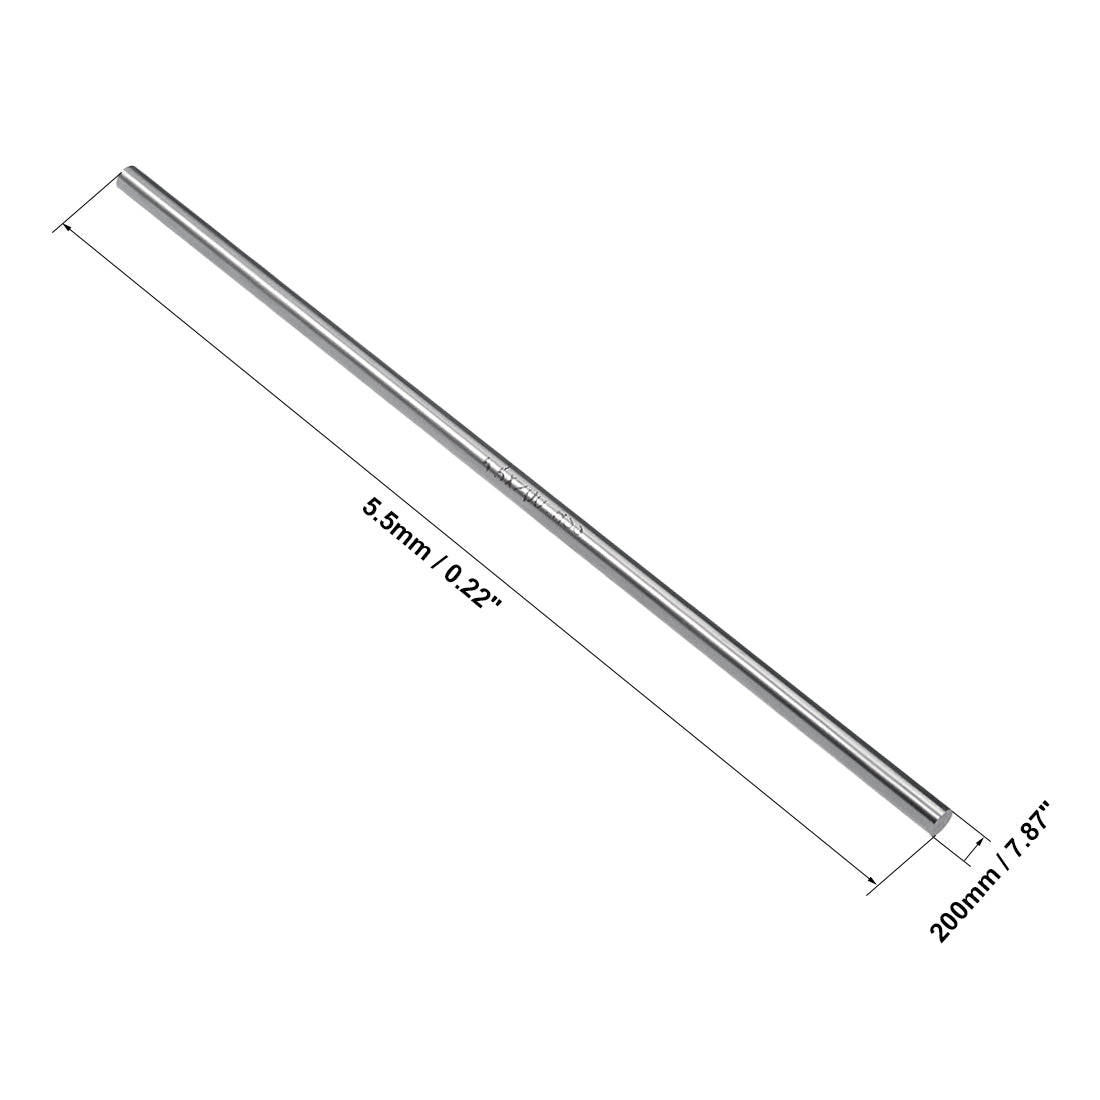 uxcell Uxcell Round Rod 200mm Length HSS Lathe Bar Stock DIY Craft Tool 2 Pcs